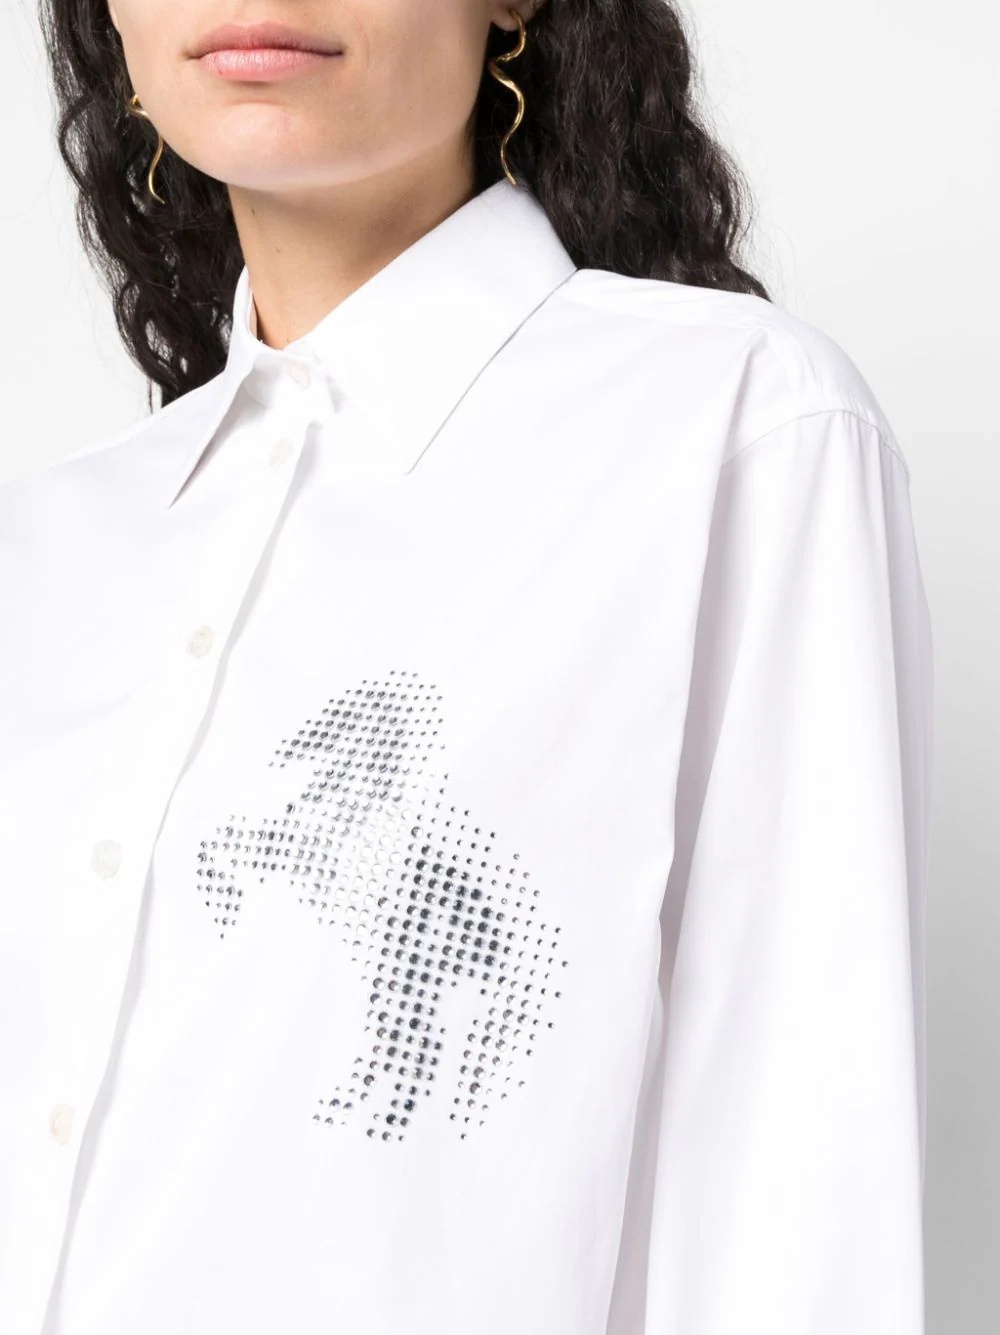 Crystal Pixel Horse Shirt - 5